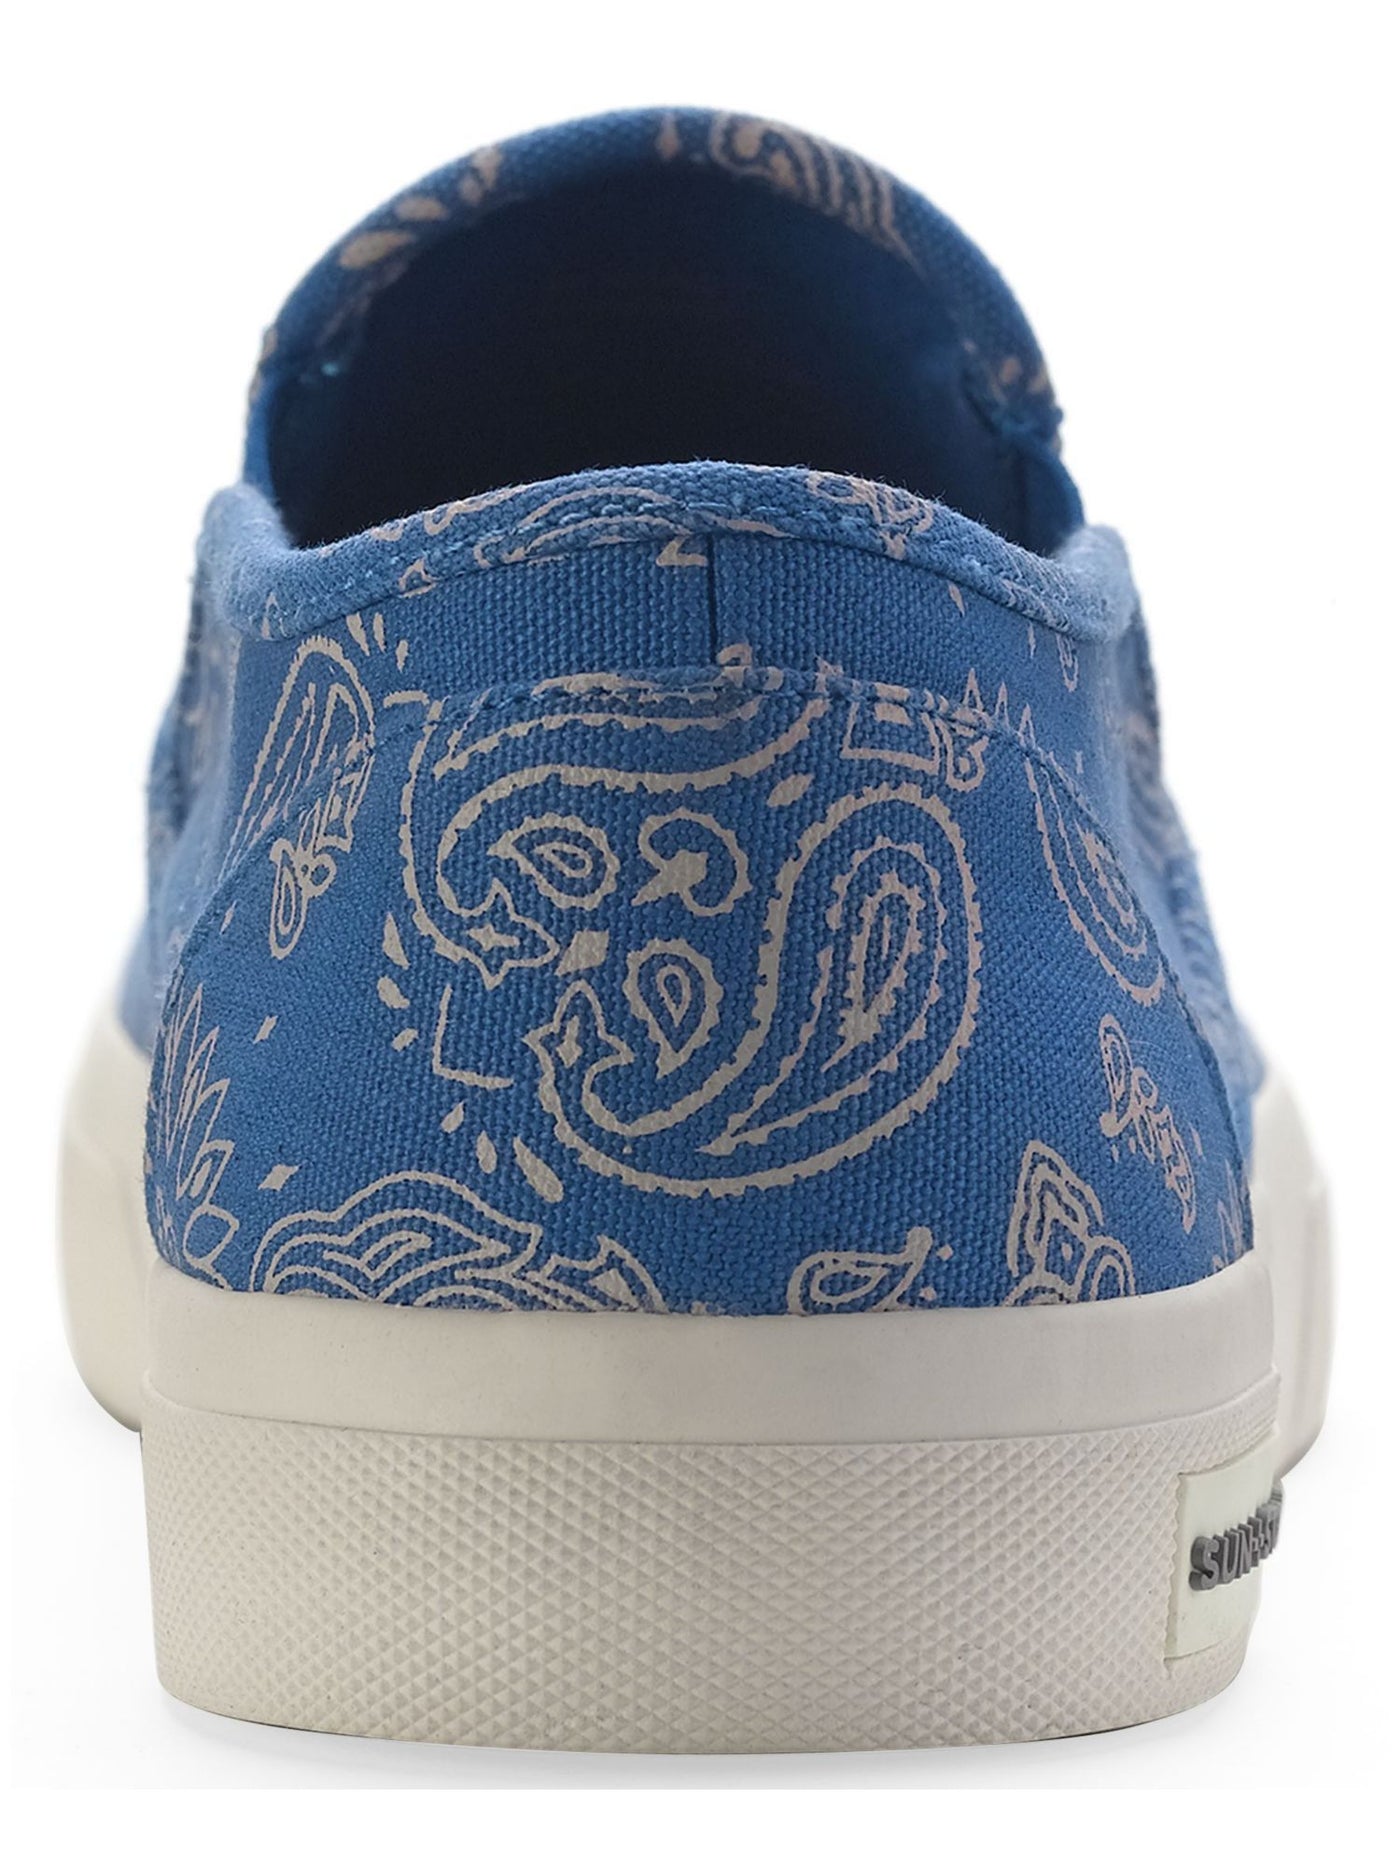 SUN STONE Mens Blue Bandana Goring Padded Reins Round Toe Platform Slip On Sneakers Shoes 8.5 M